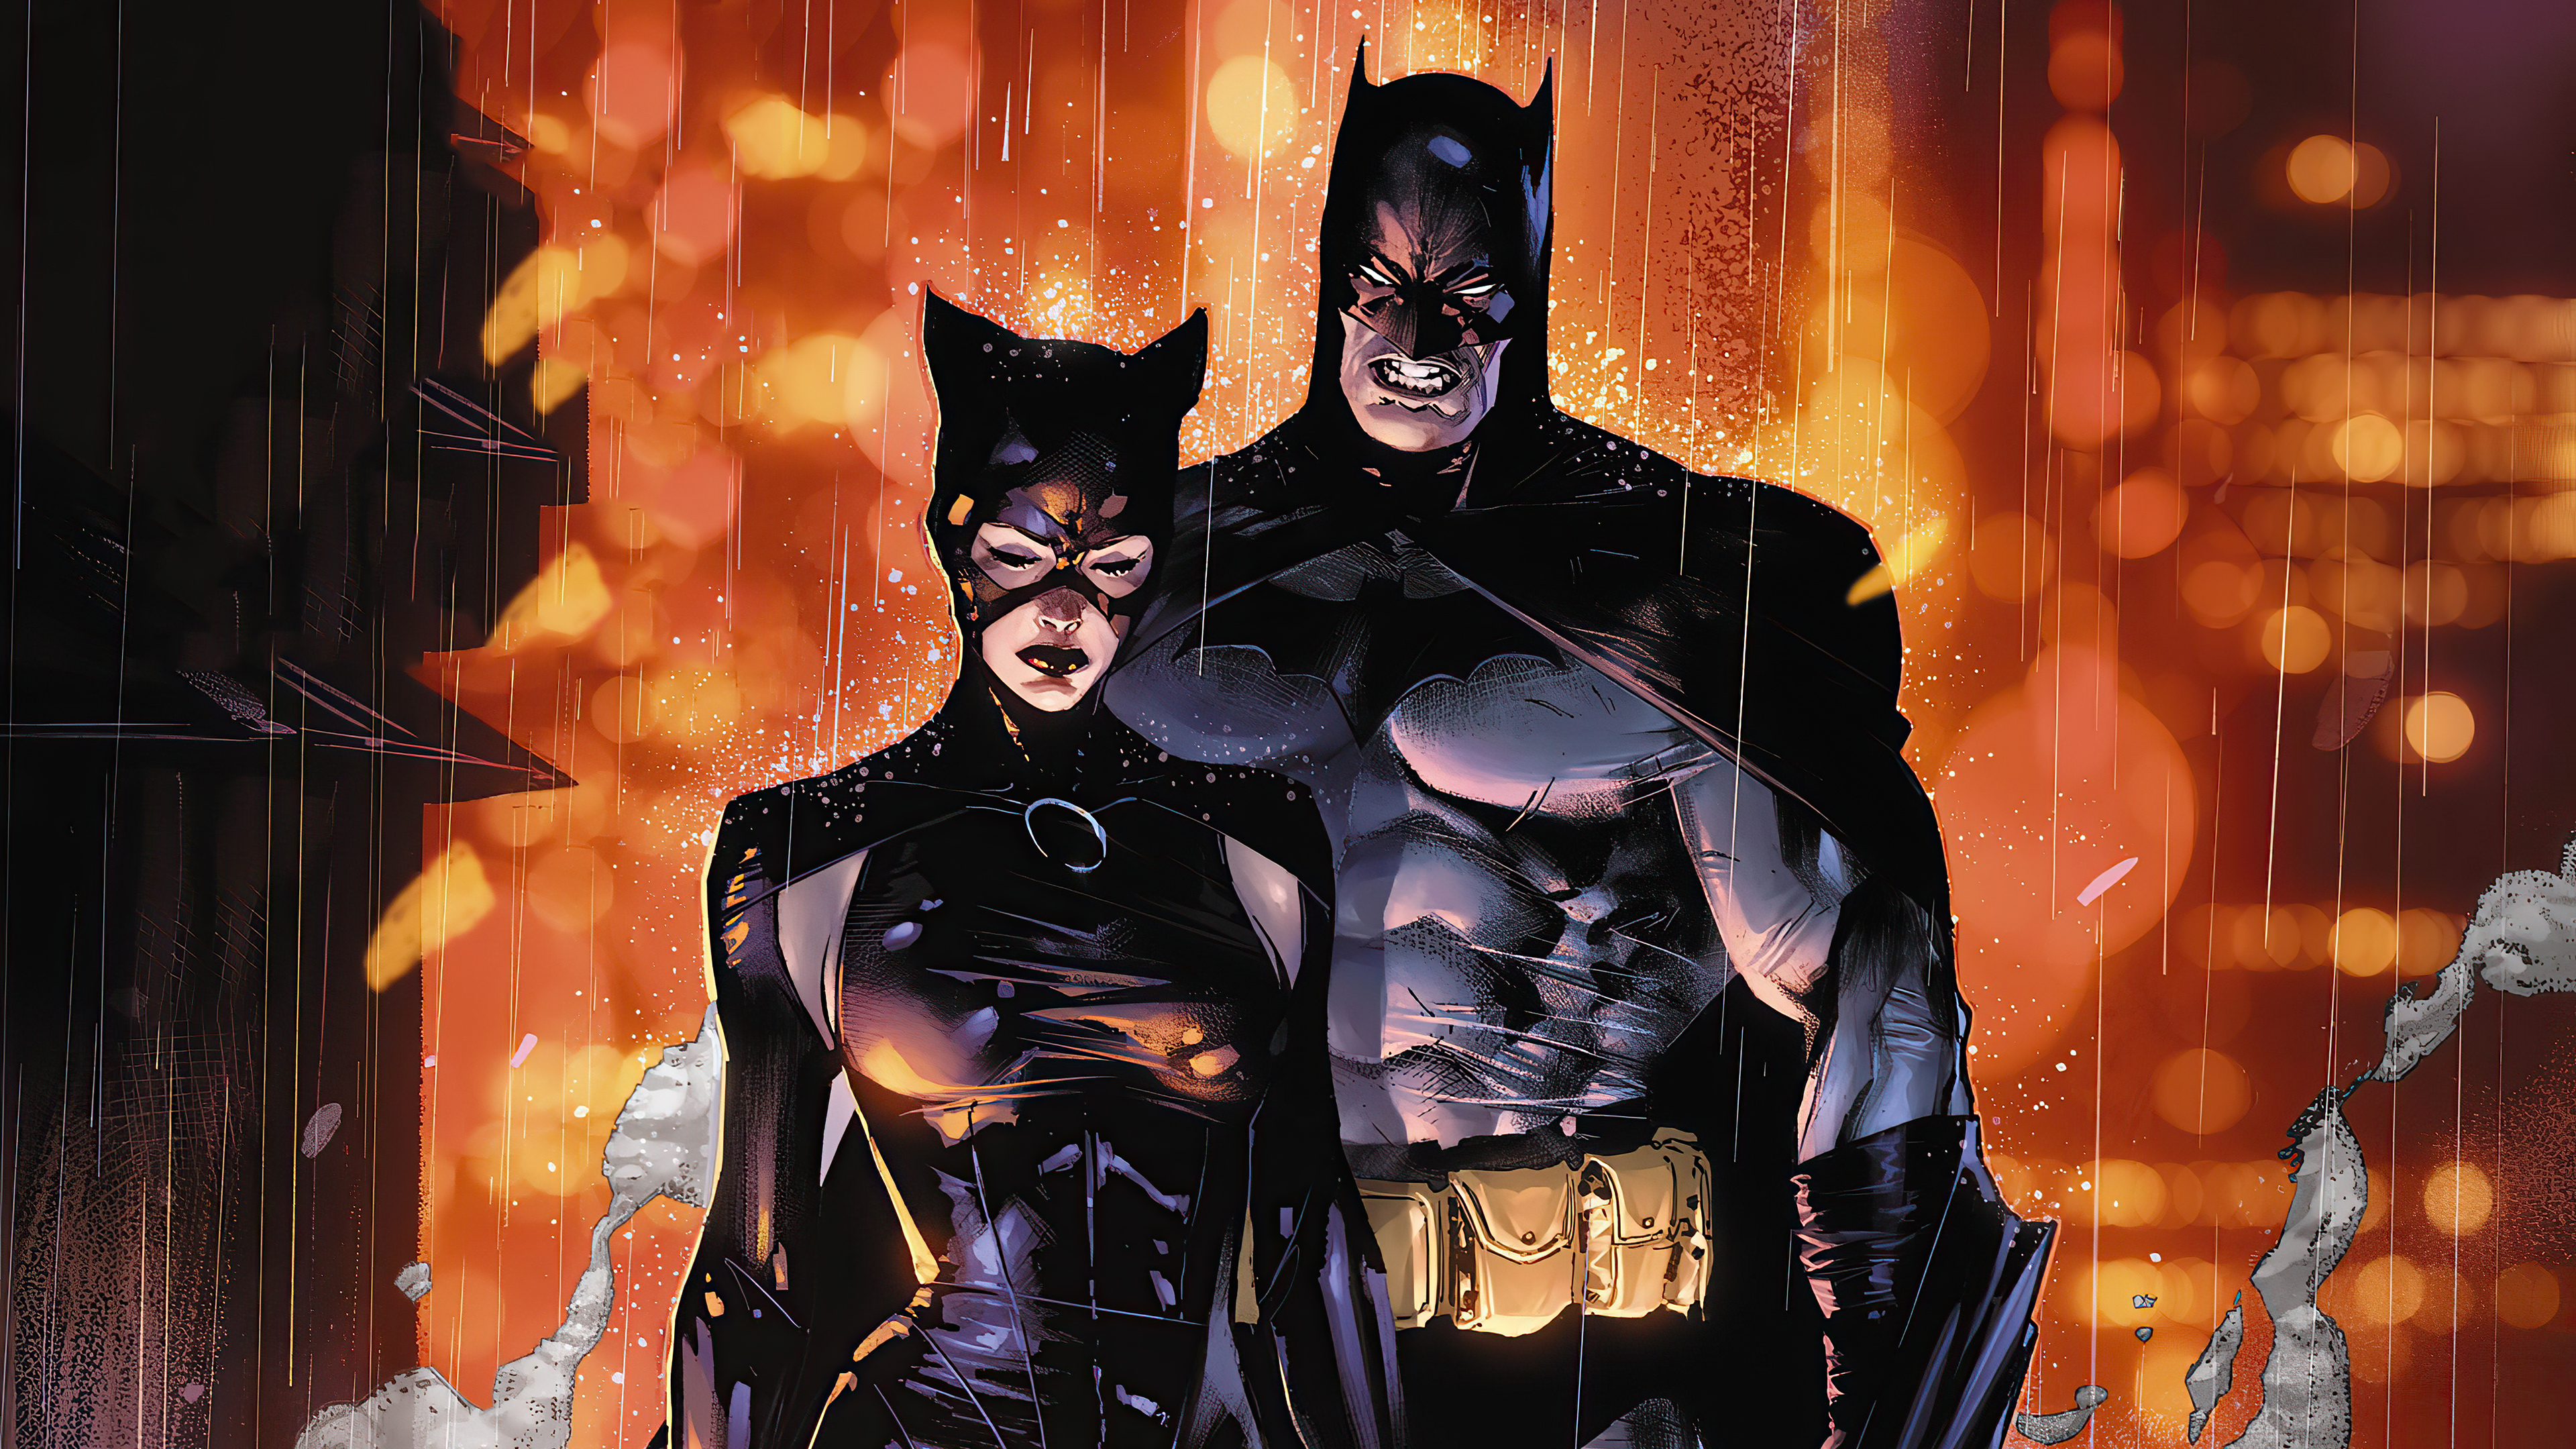 Wallpaper 4k Angry Batman And Catwoman Wallpaper